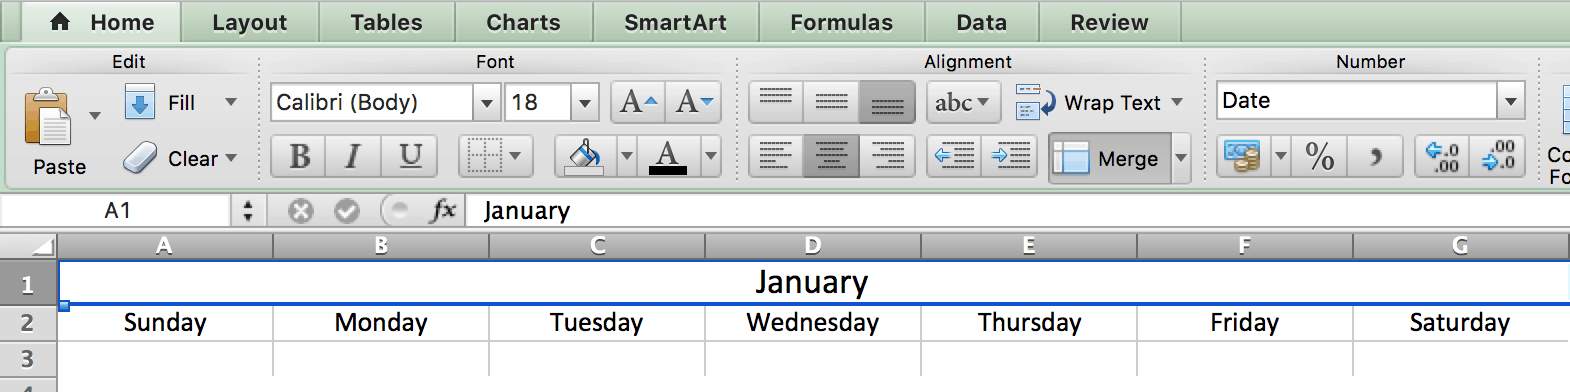 Merge Center - Calendar in Excel